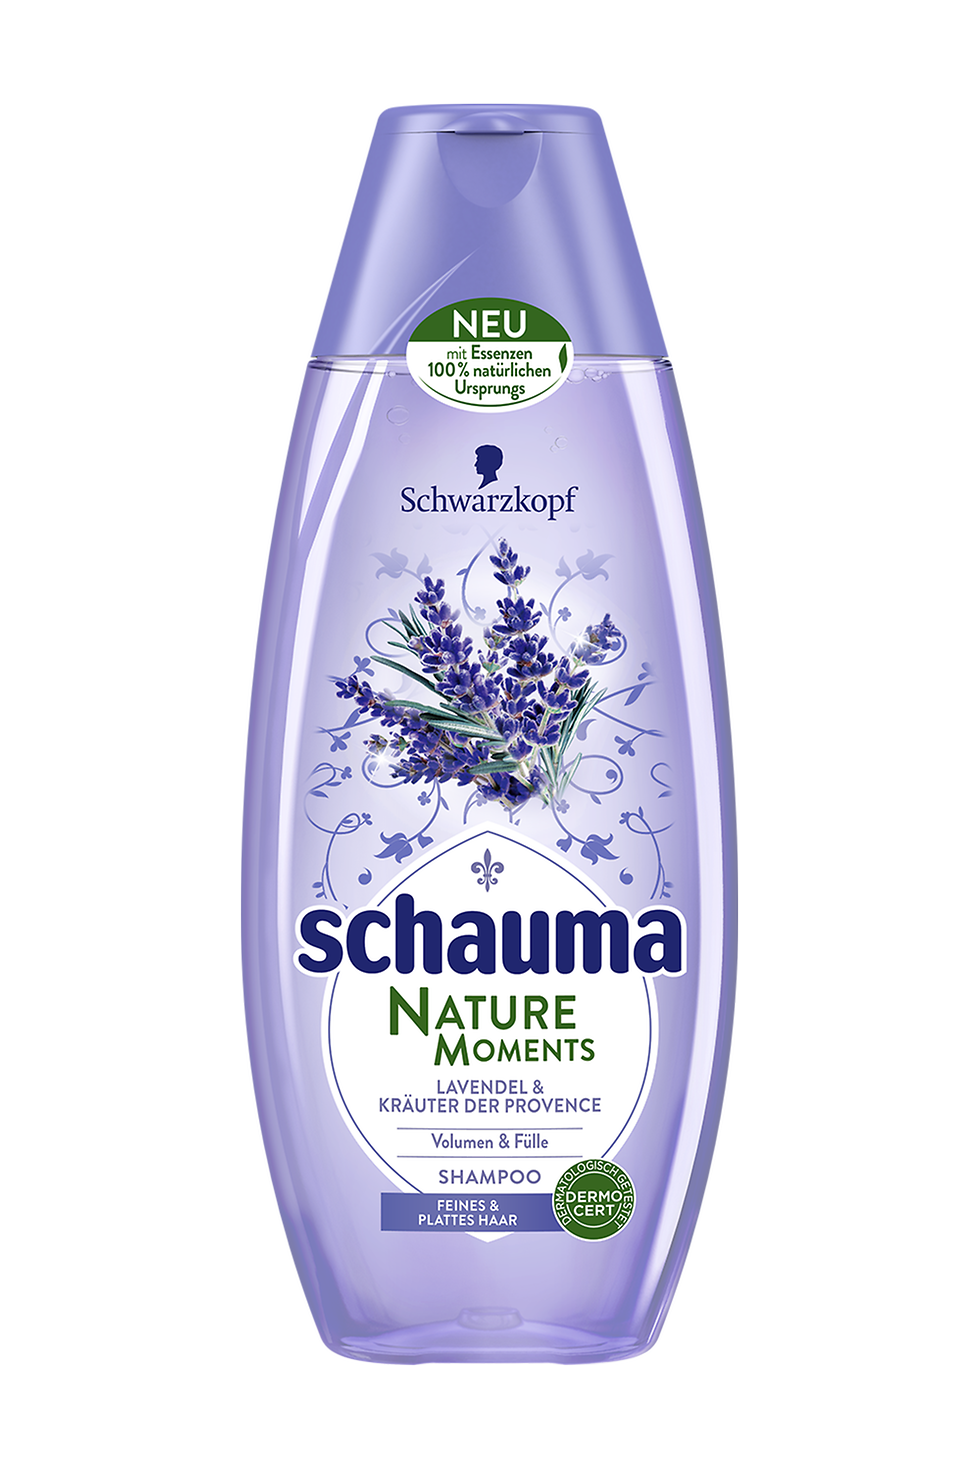 Schauma Nature Moments Lavendel & Kräuter der Provence Shampoo